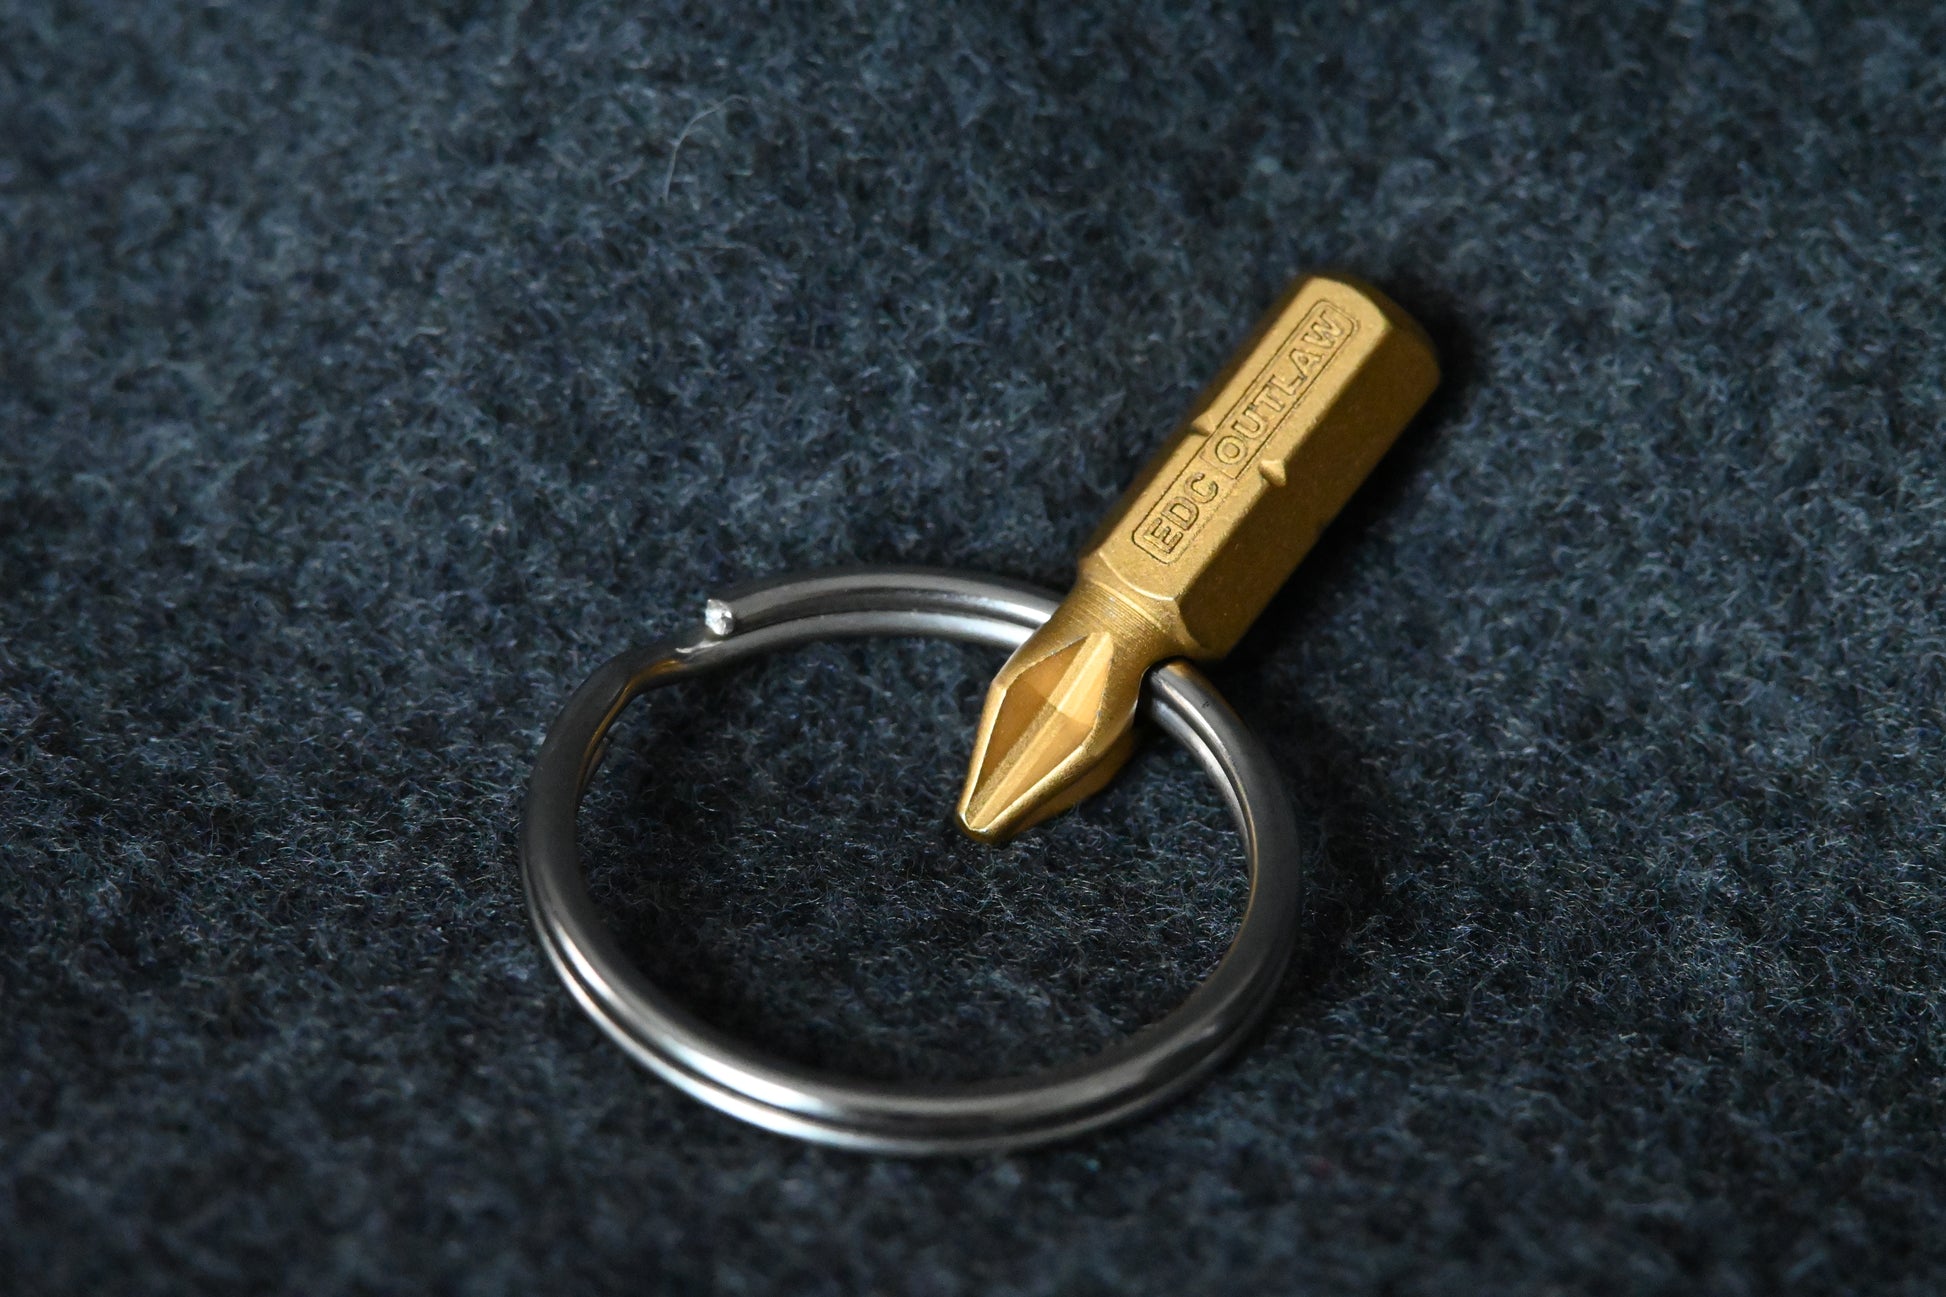 Q-Ring V5 Titanium Quick-Release Keychain, Bottle Openers, Drop